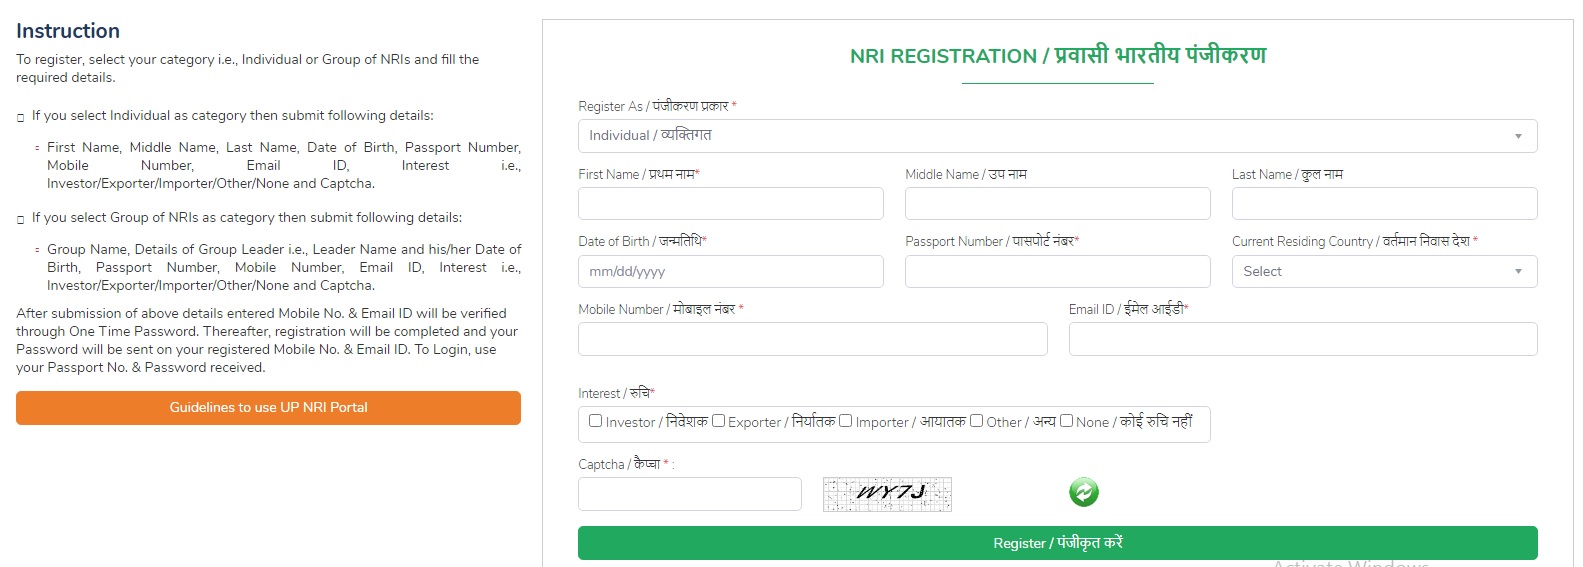 nri registration